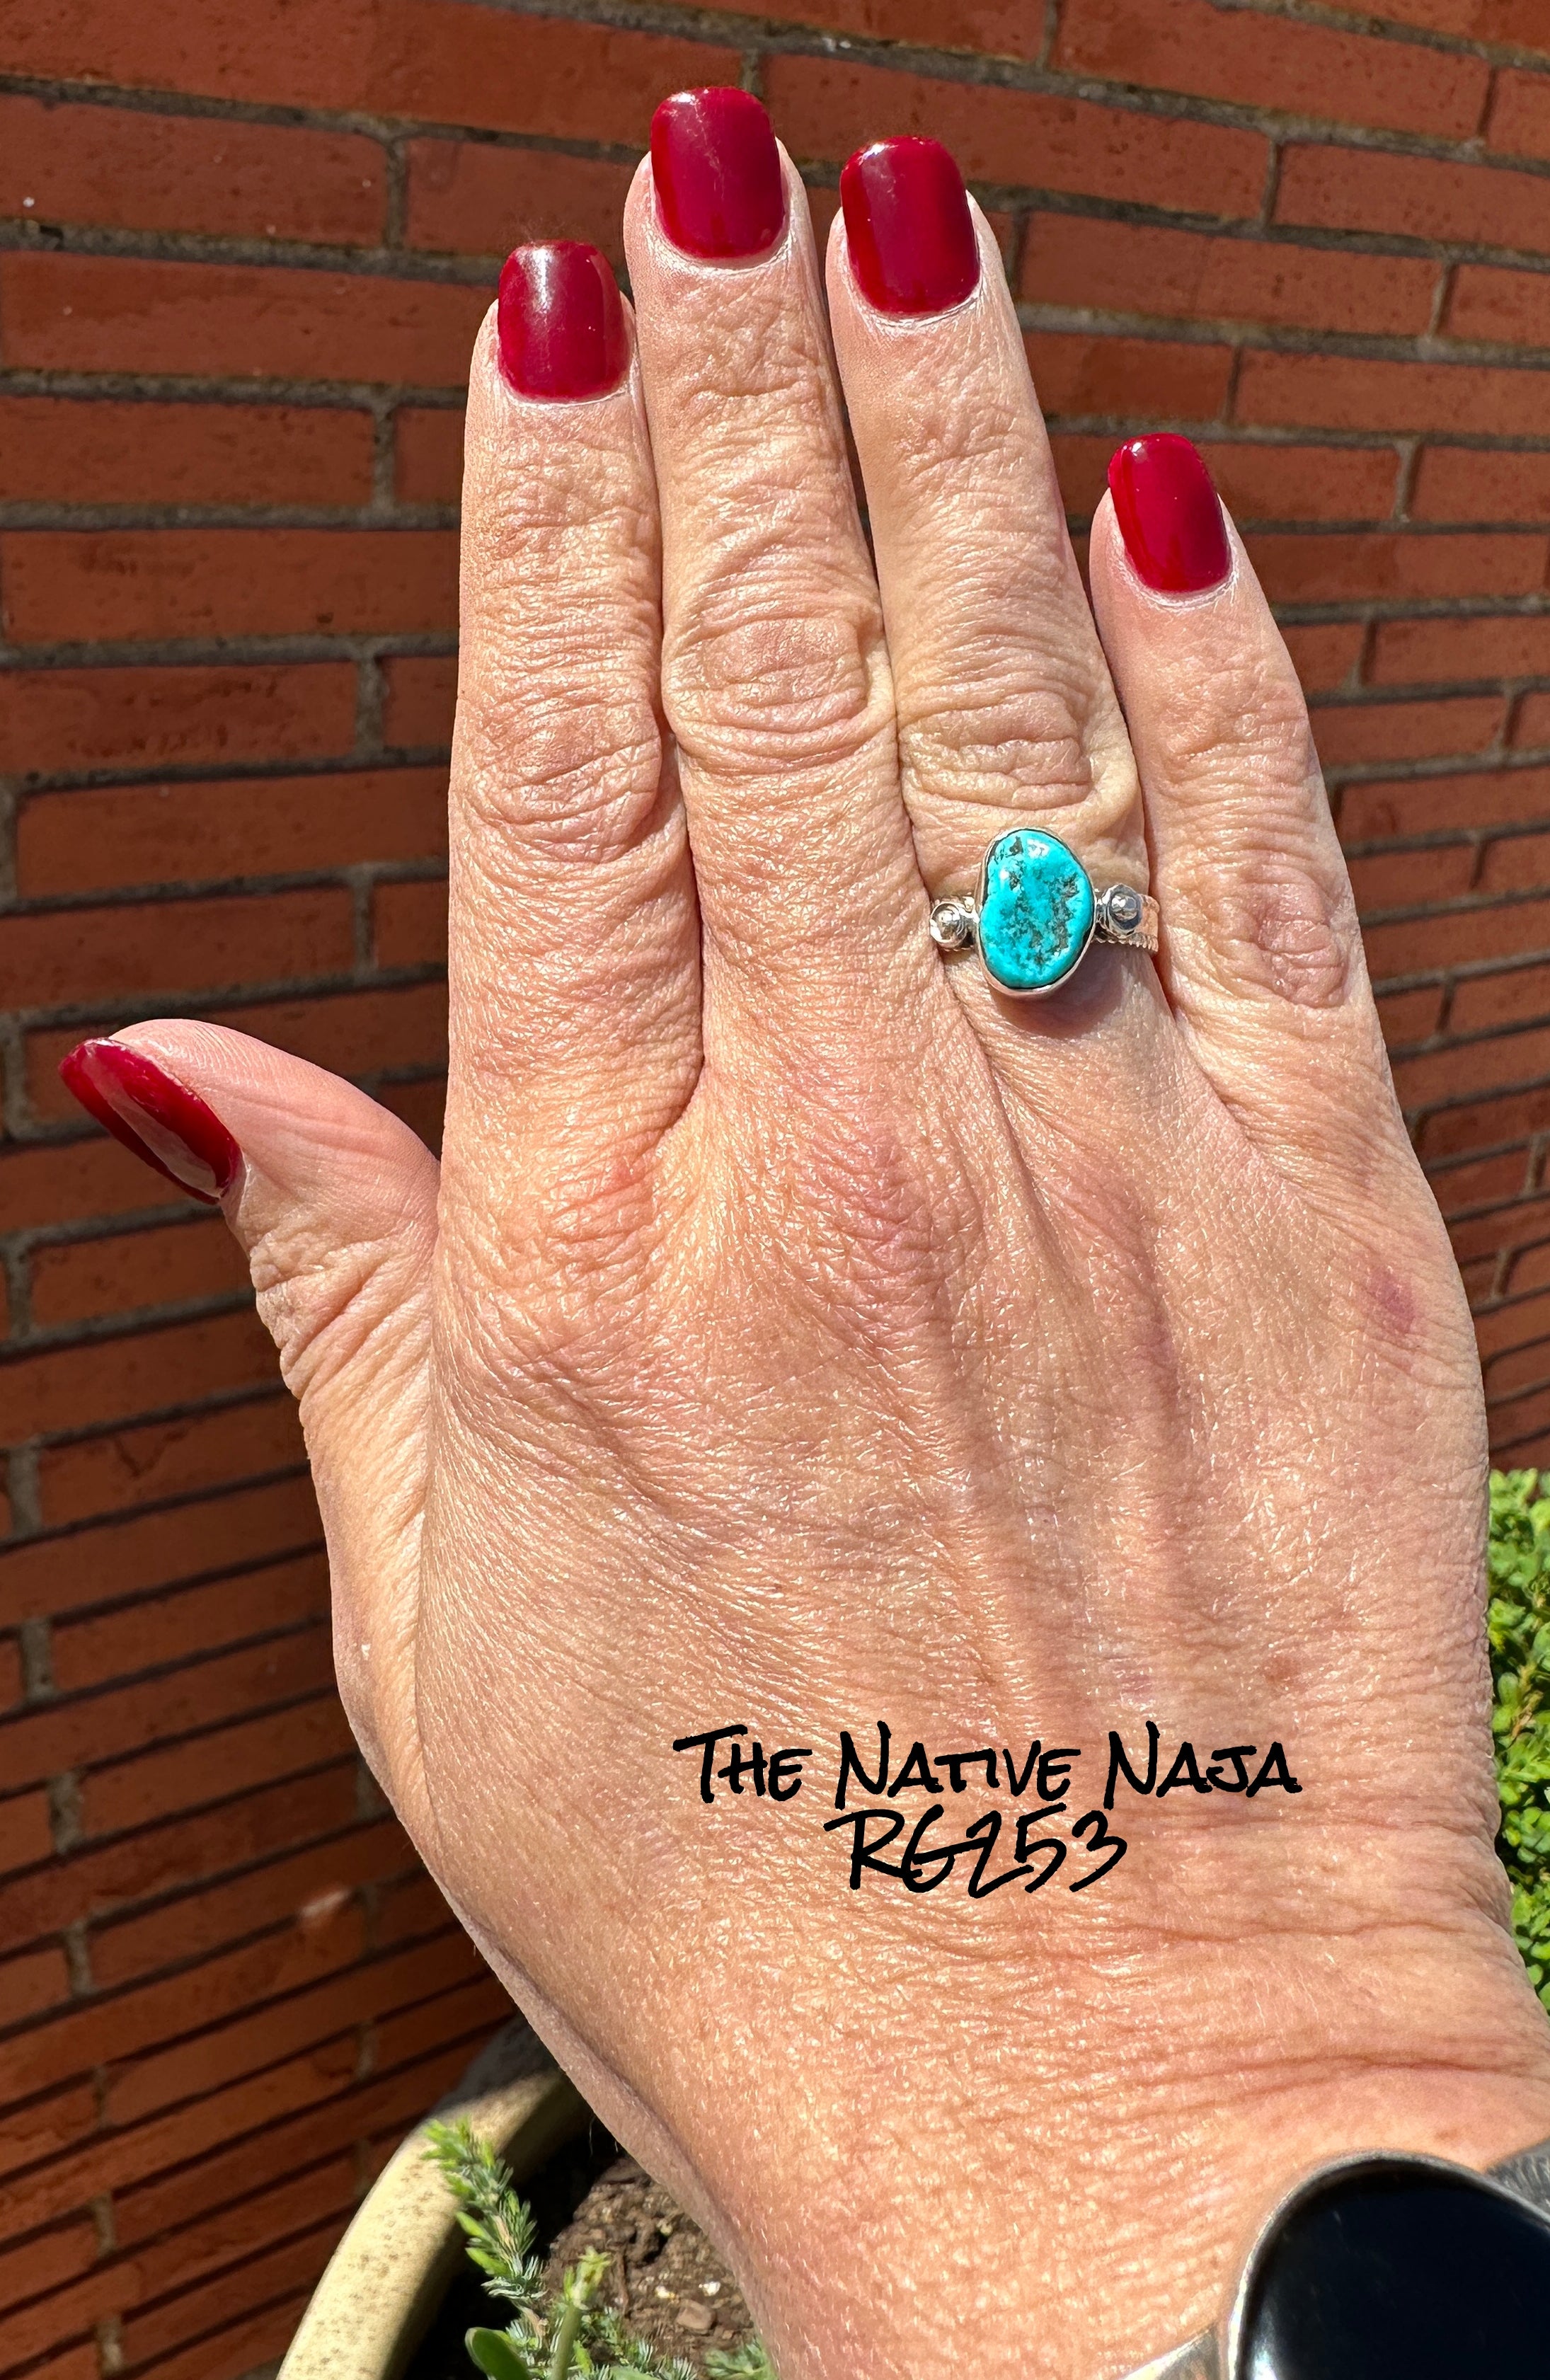 Navajo Margie Chee Sterling Silver & Kingman Turquoise Nugget Ring SZ 7 1/4 RG253